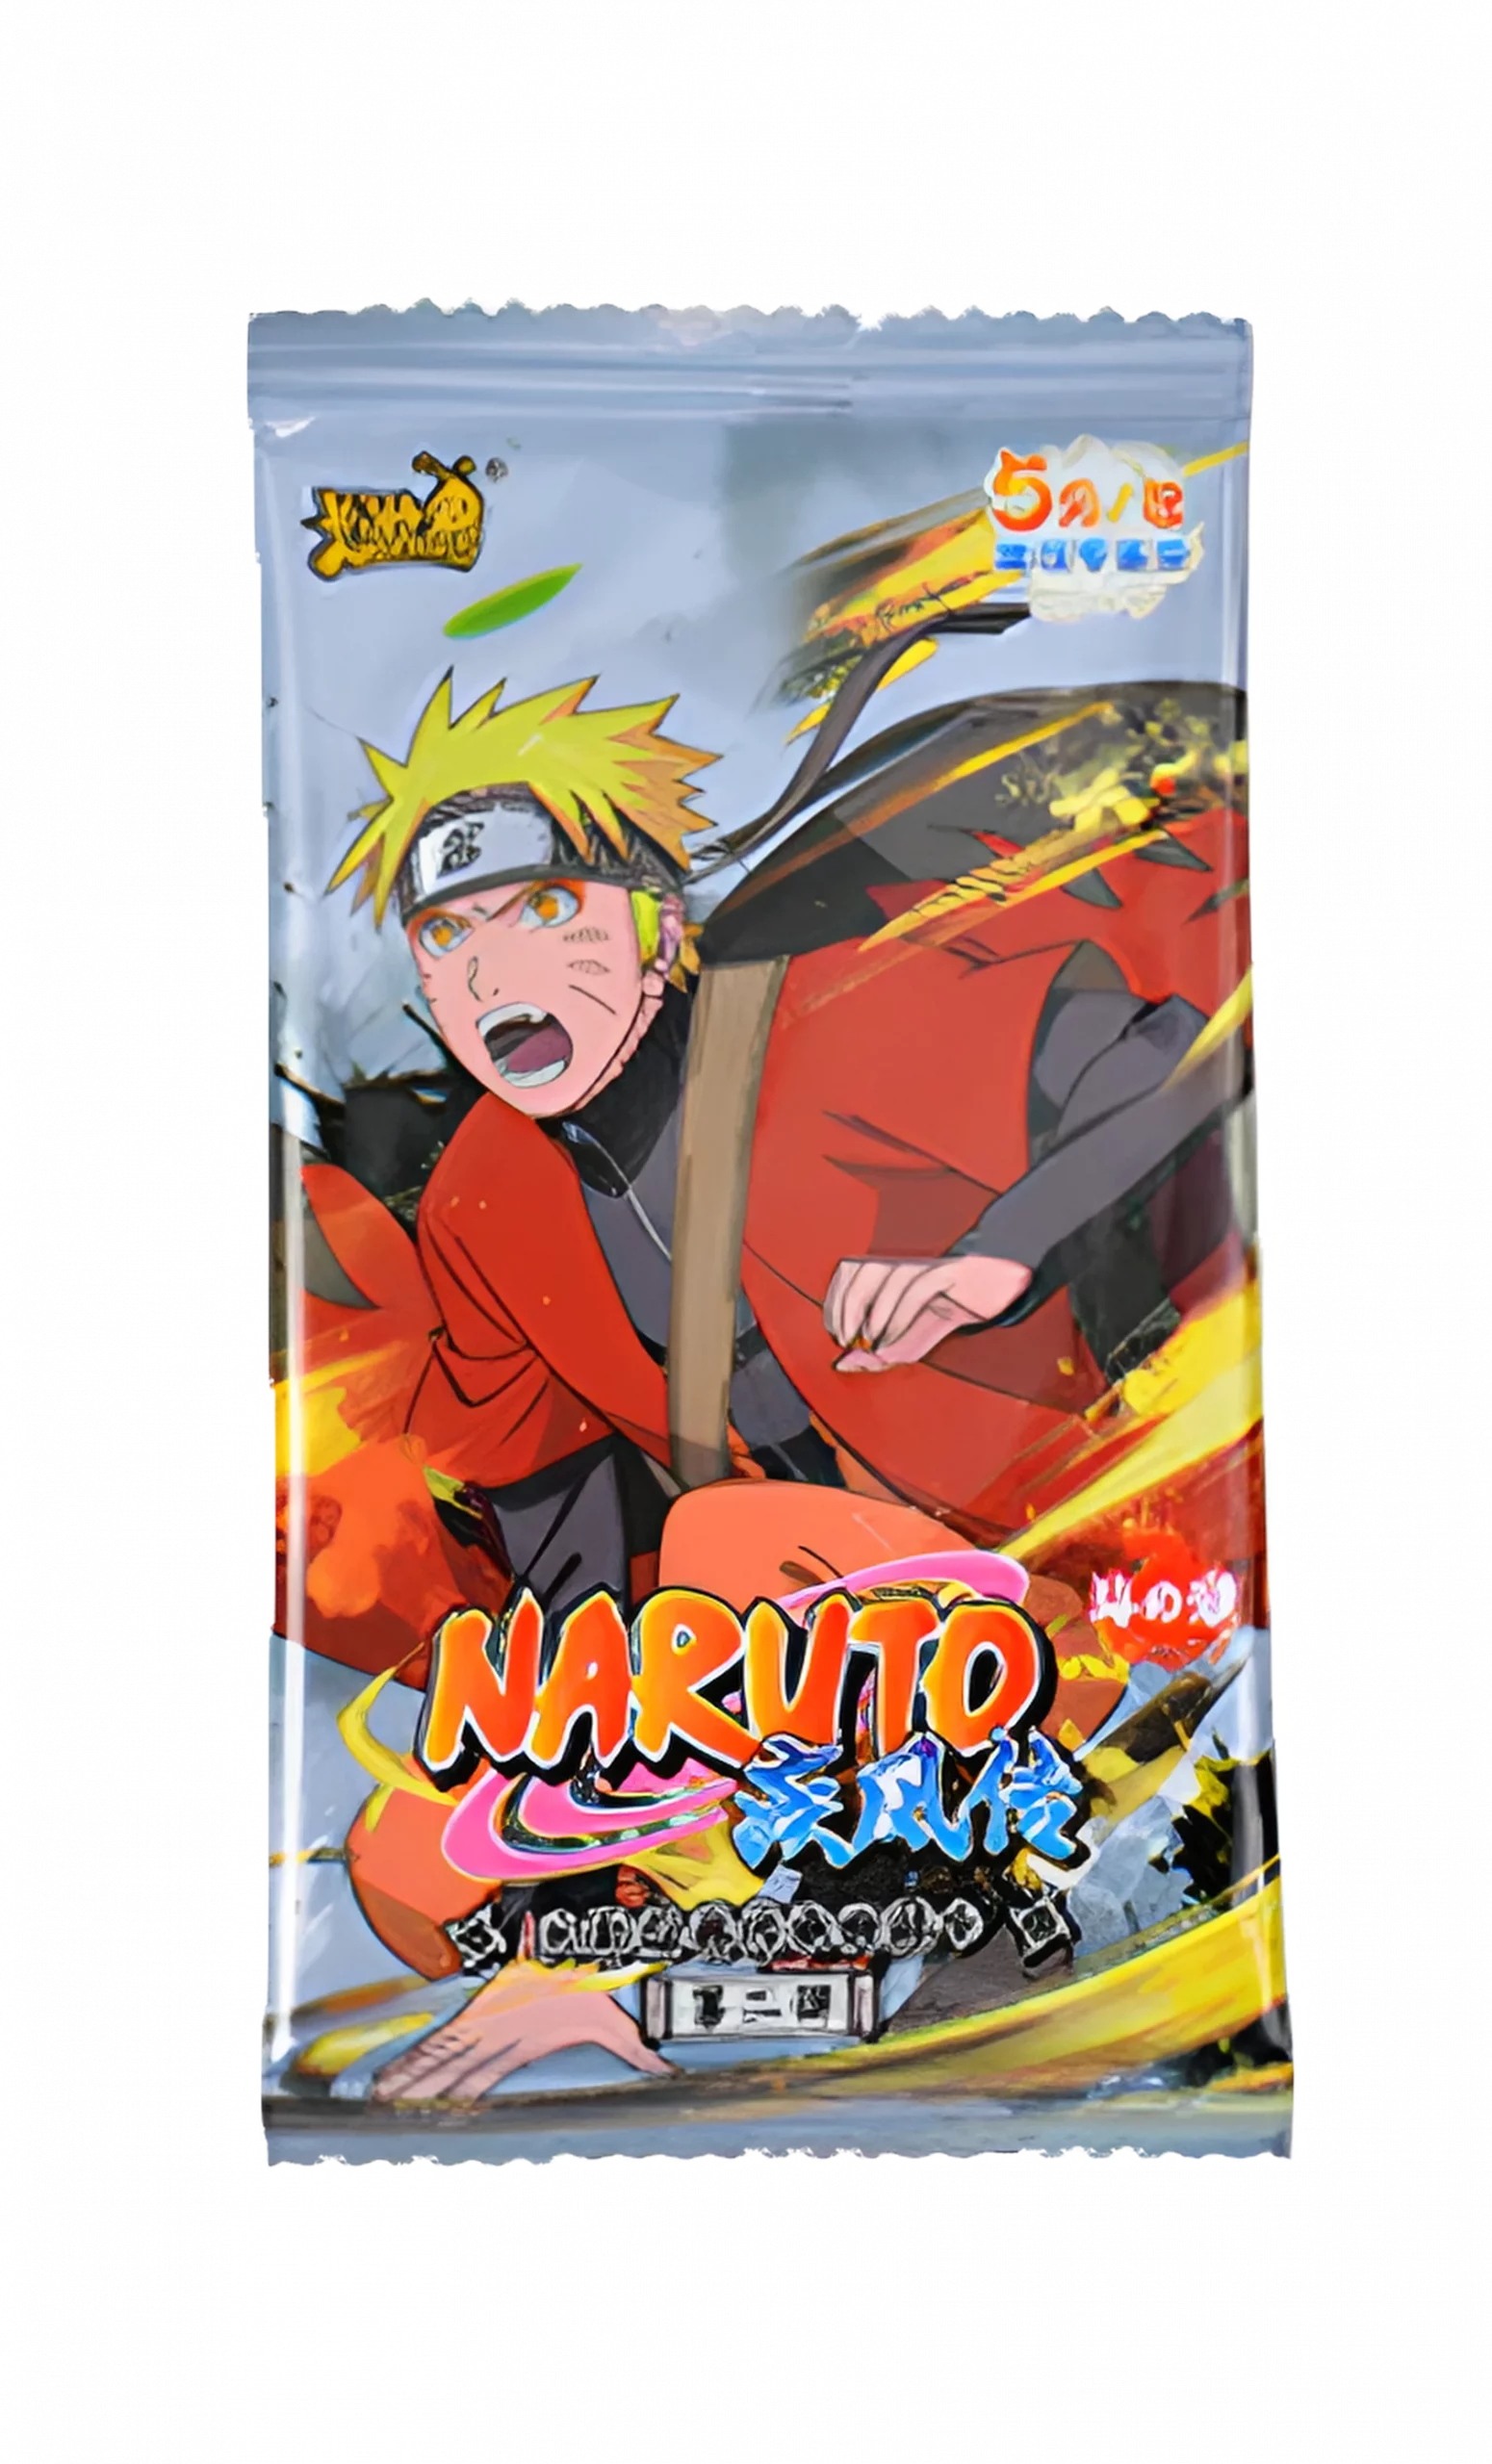 Display - Naruto Kayou - Série 4 Yuan 5